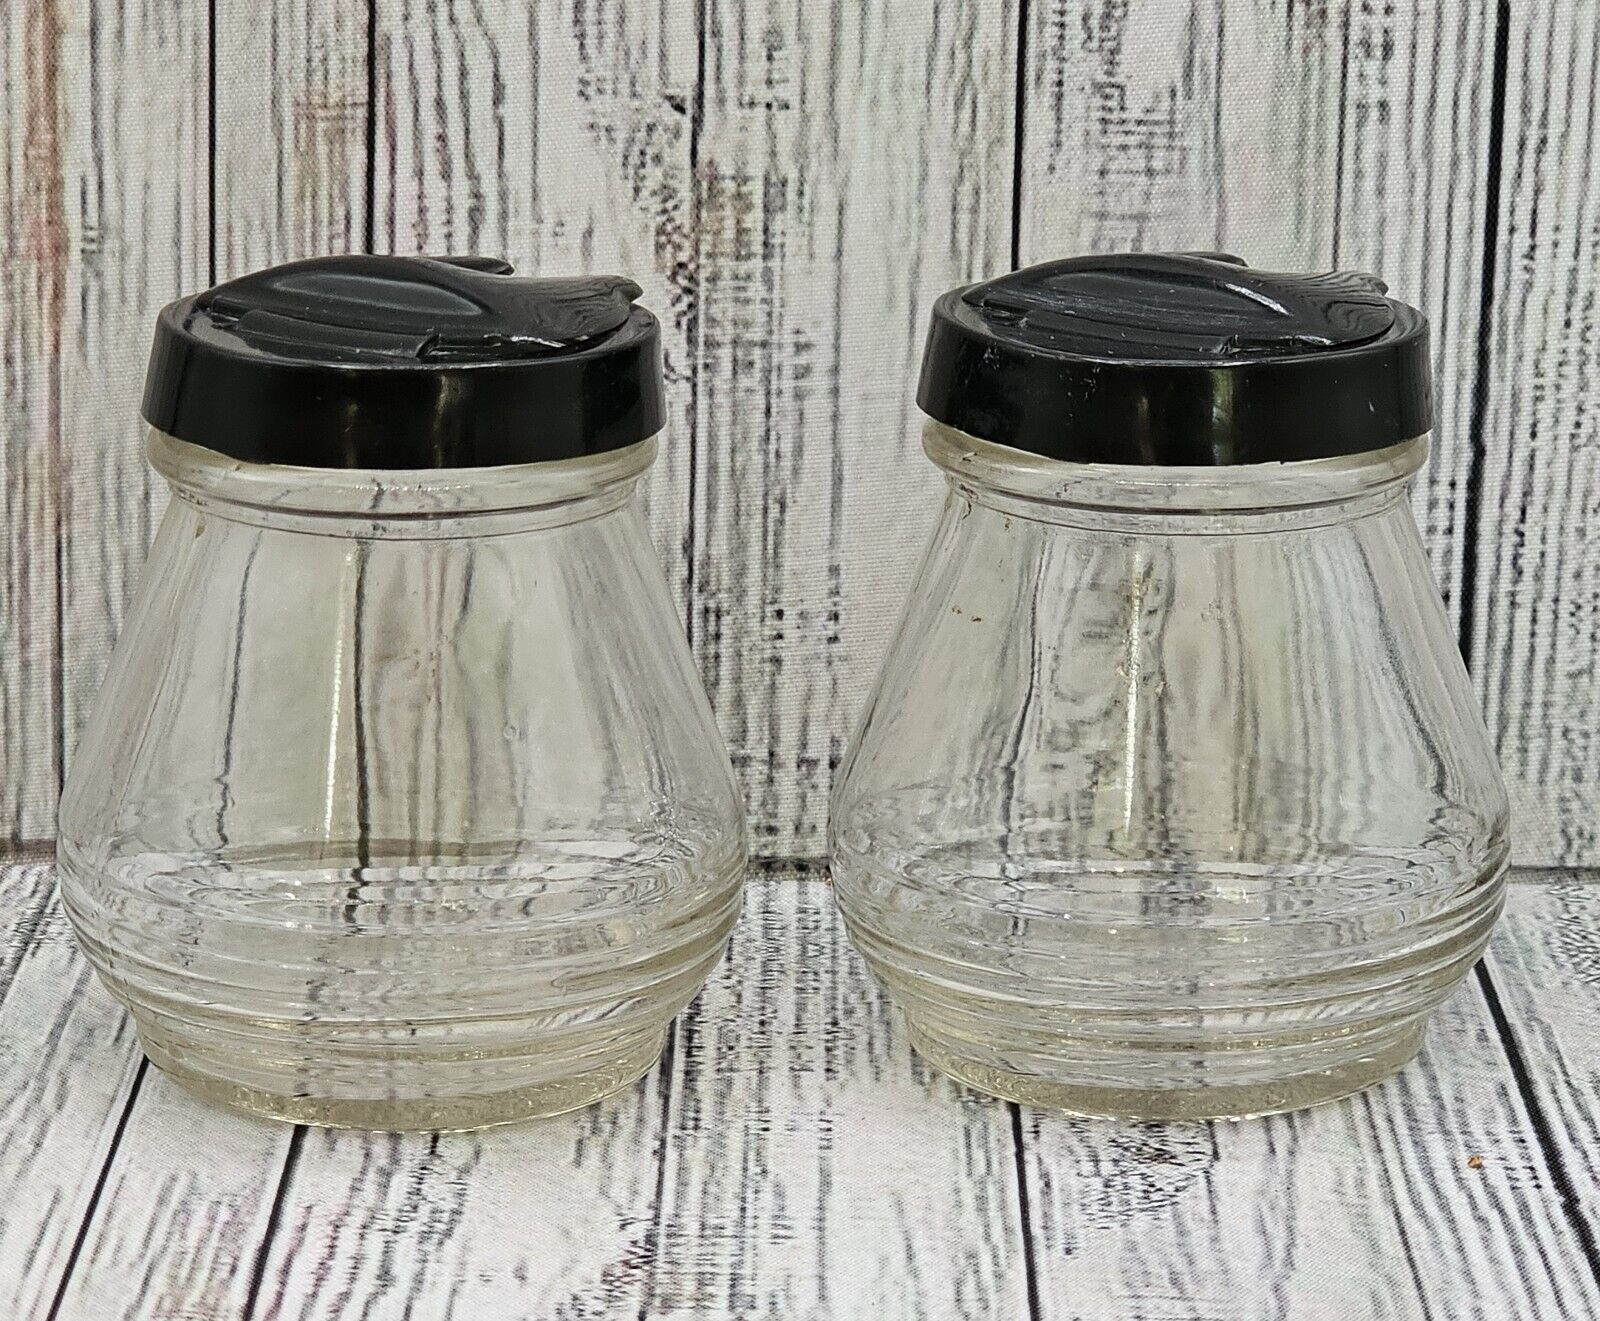 Vintage Federal Tool Corp. Sugar or Creamer Jars with Black Plastic Lid set of 2